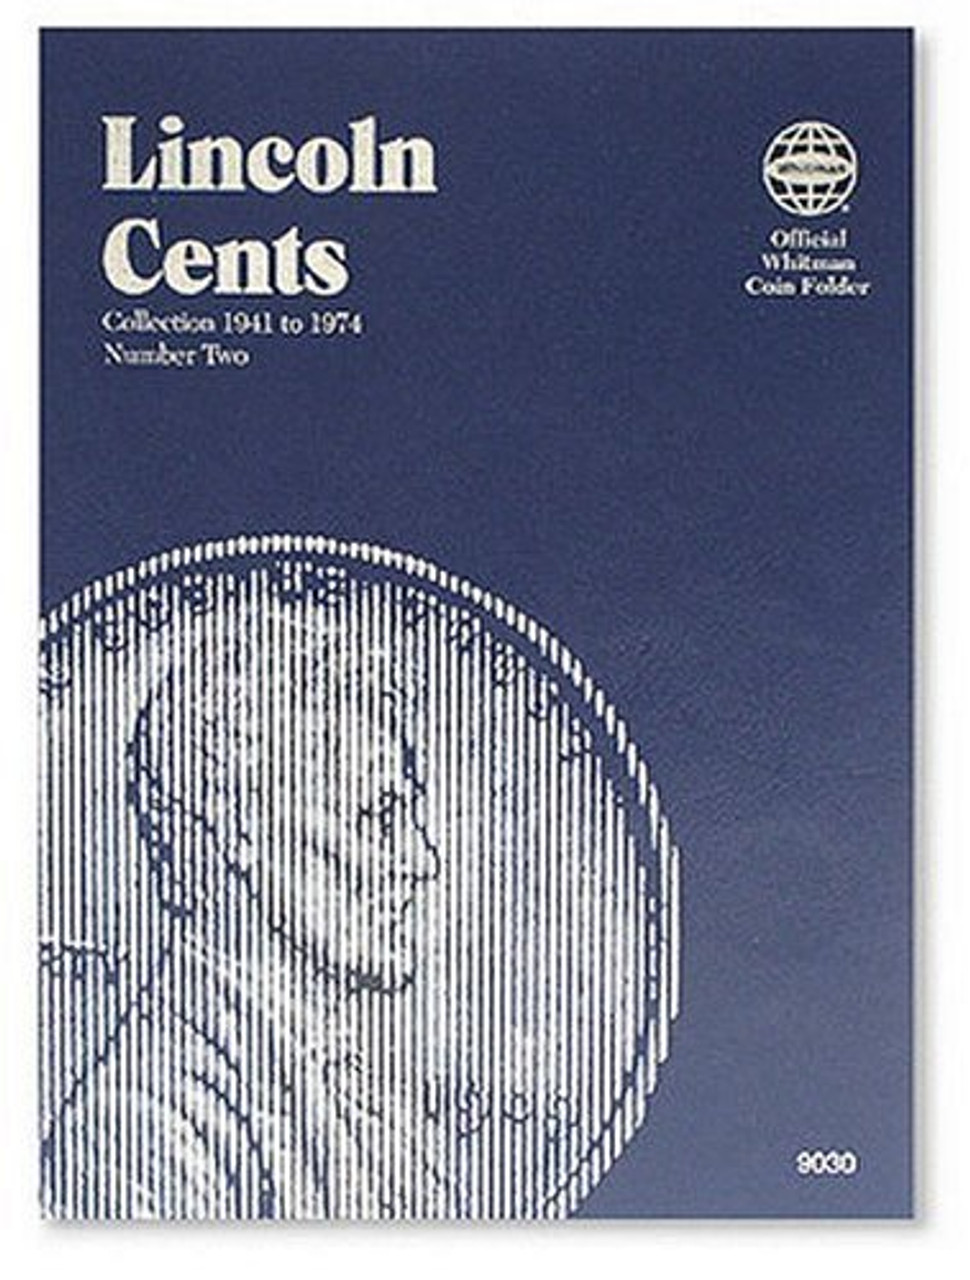 Whitman Coin Folders